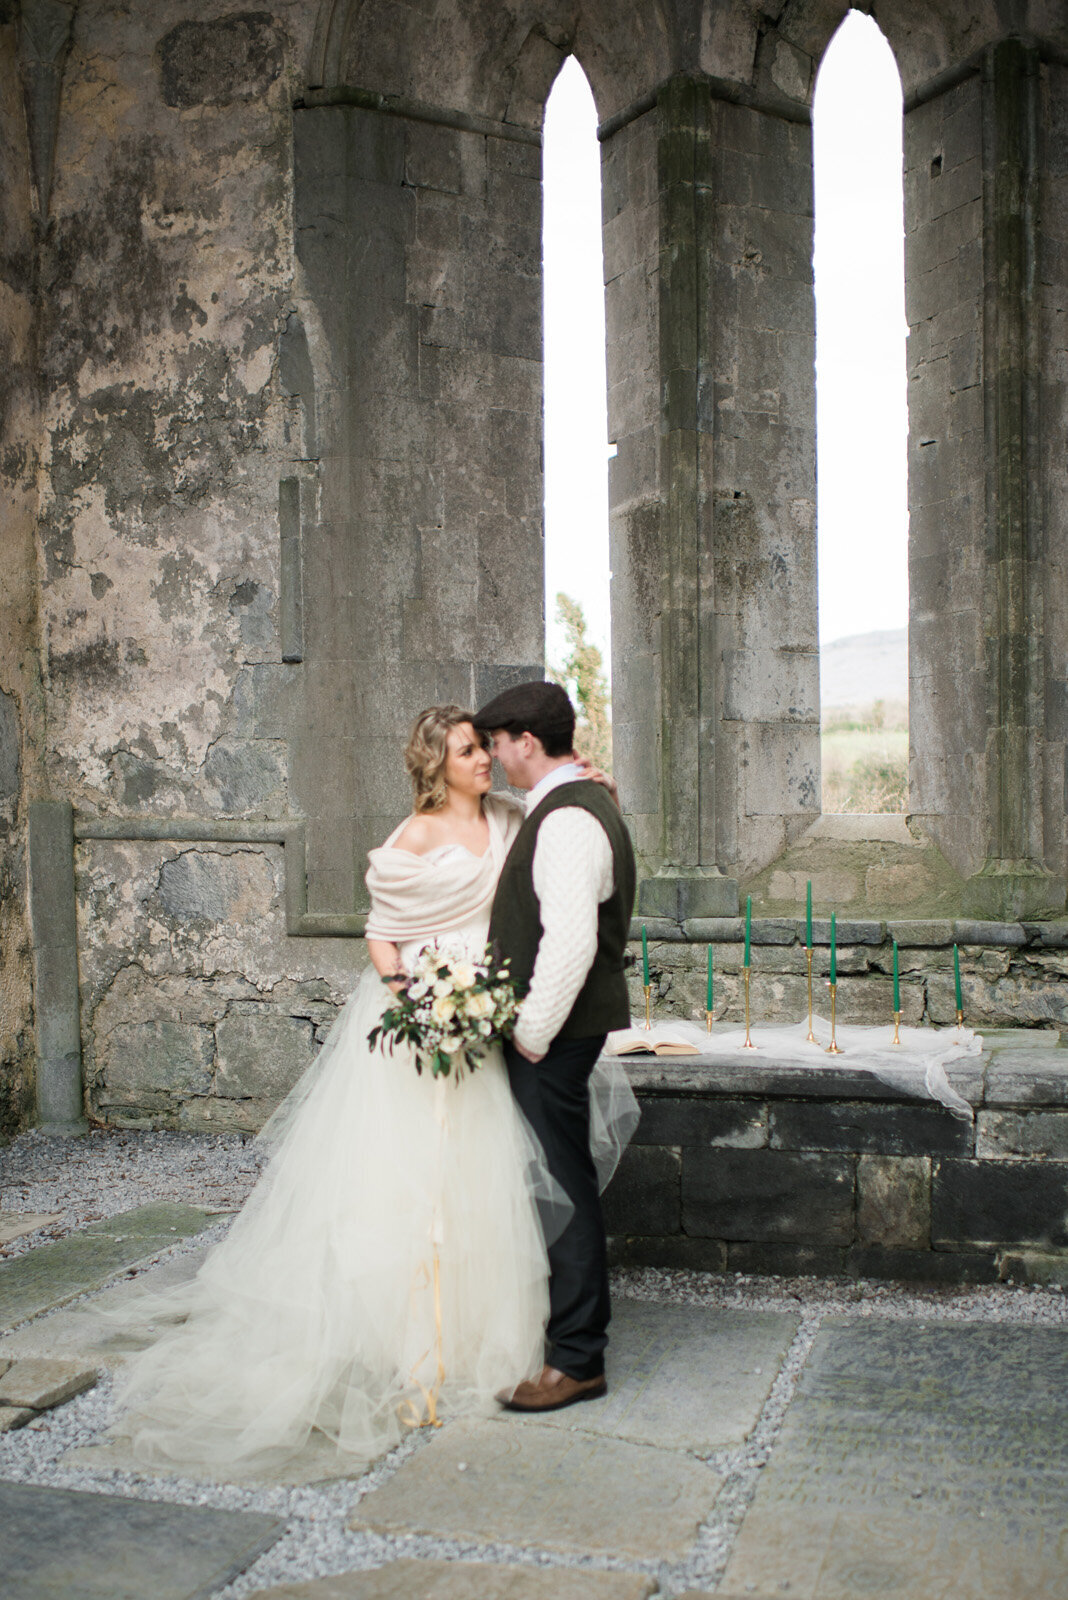 Kate-Murtaugh-Events-Ireland-international-destination-wedding-planner-Irish-altar-stone-castle